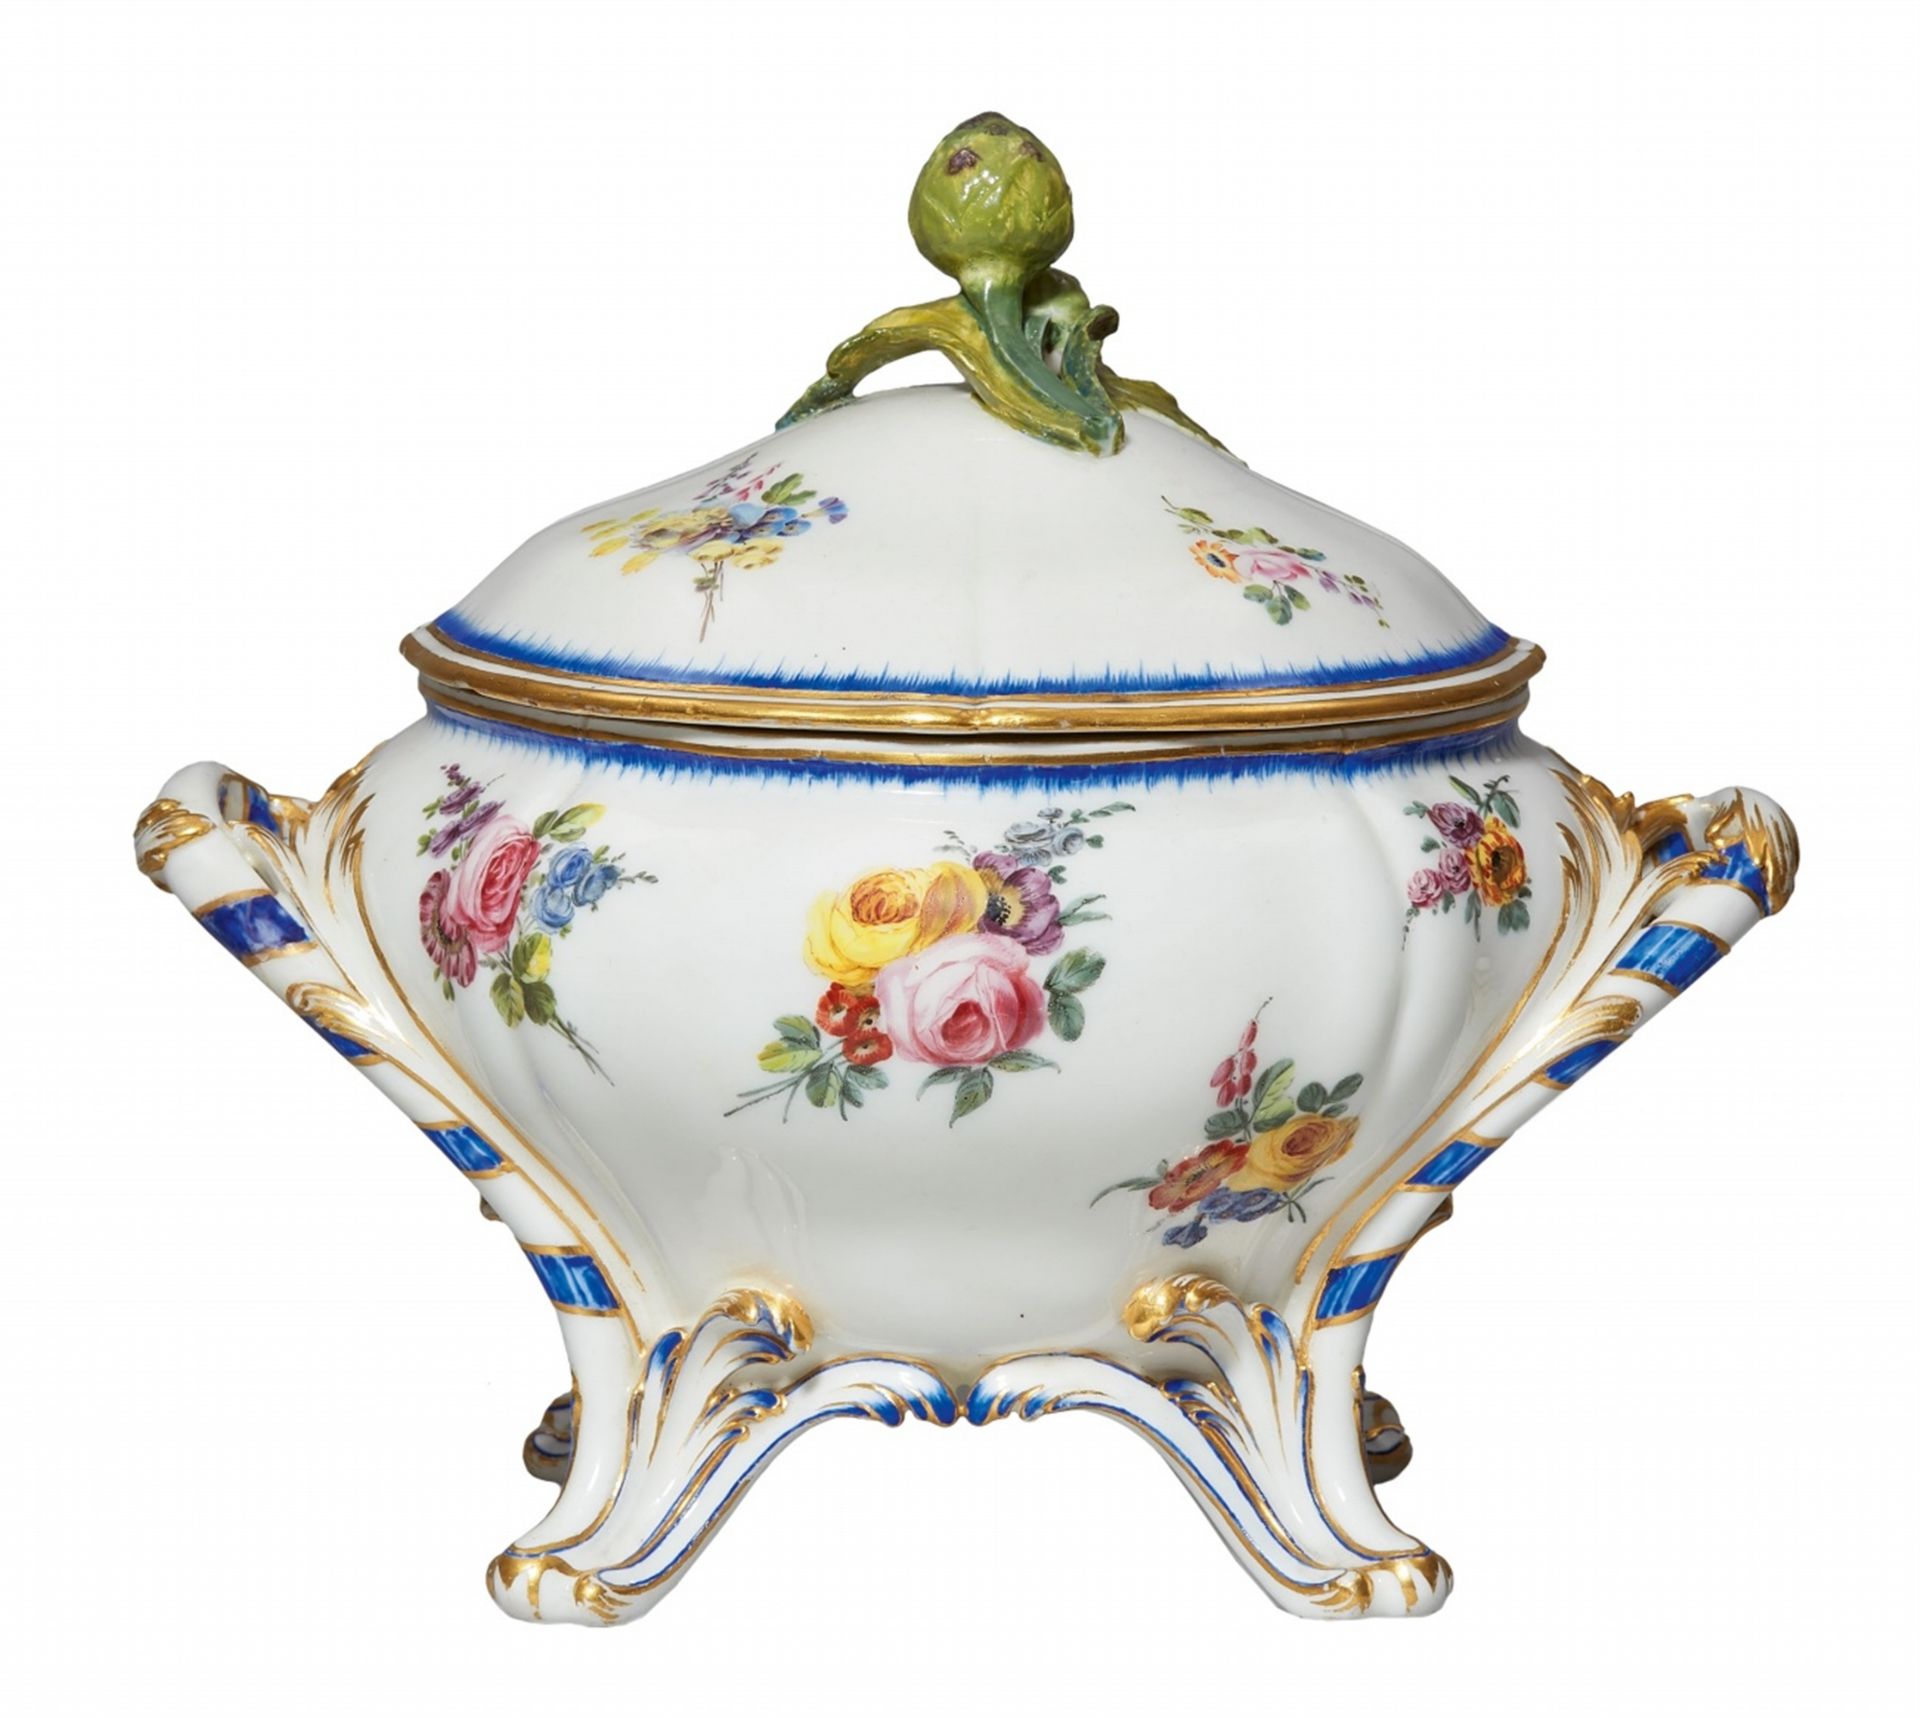 A Sèvres soft-paste porcelain “pot à oille” tureen from a service with bouquets - Image 2 of 2